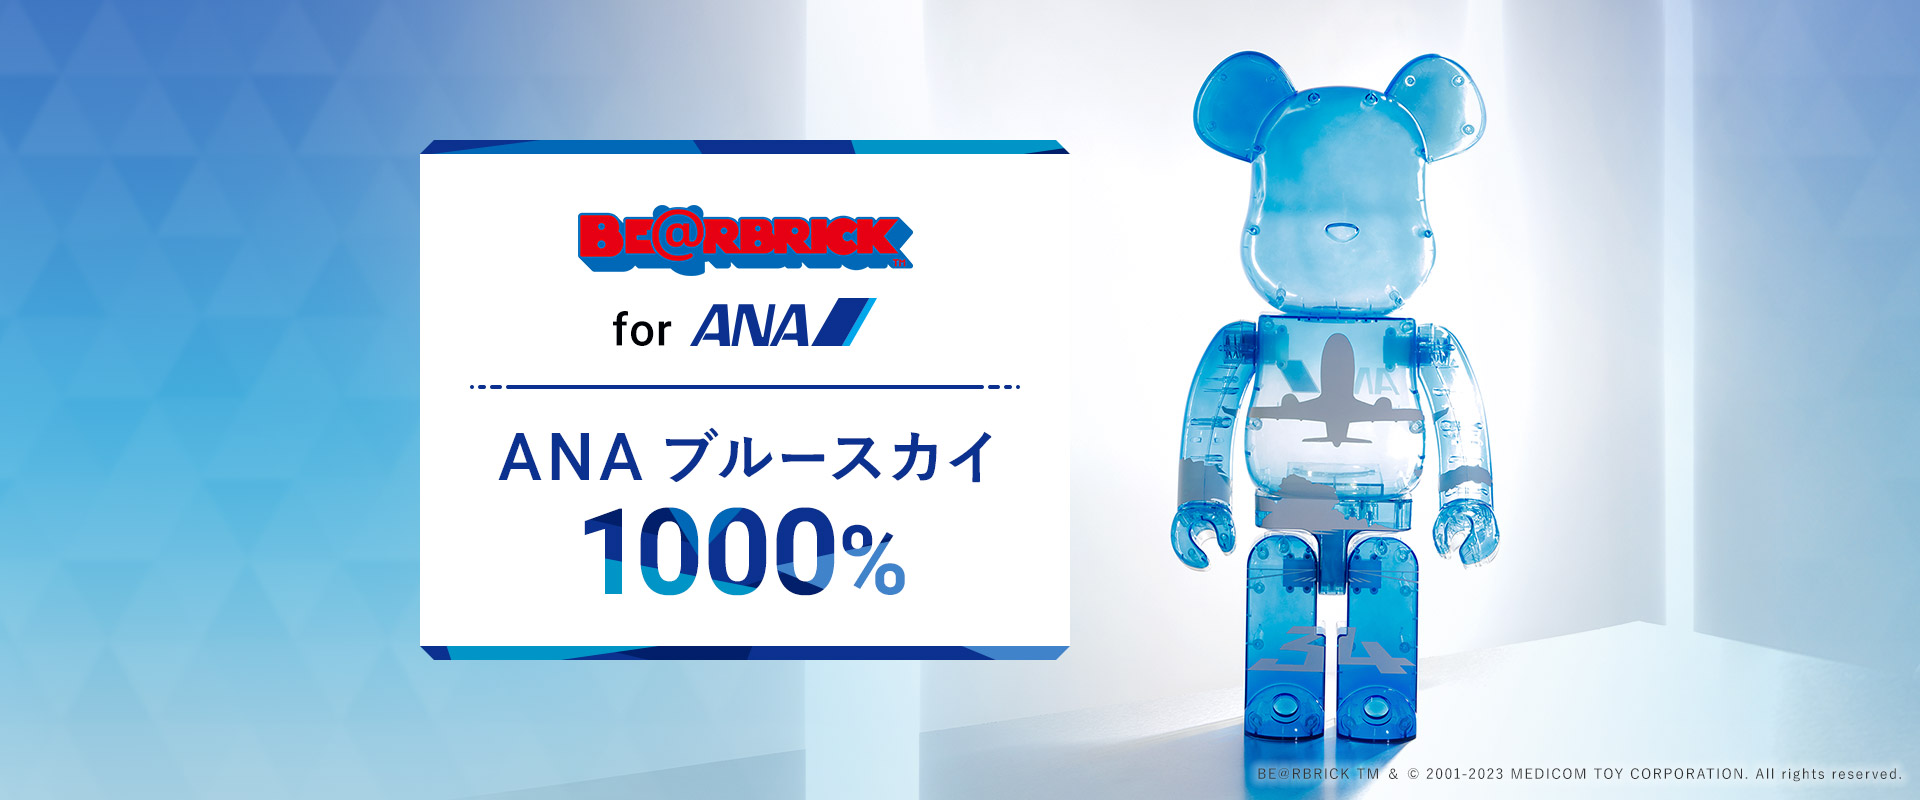 BE＠RBRICK for ANA ANA　ブルースカイ1000%